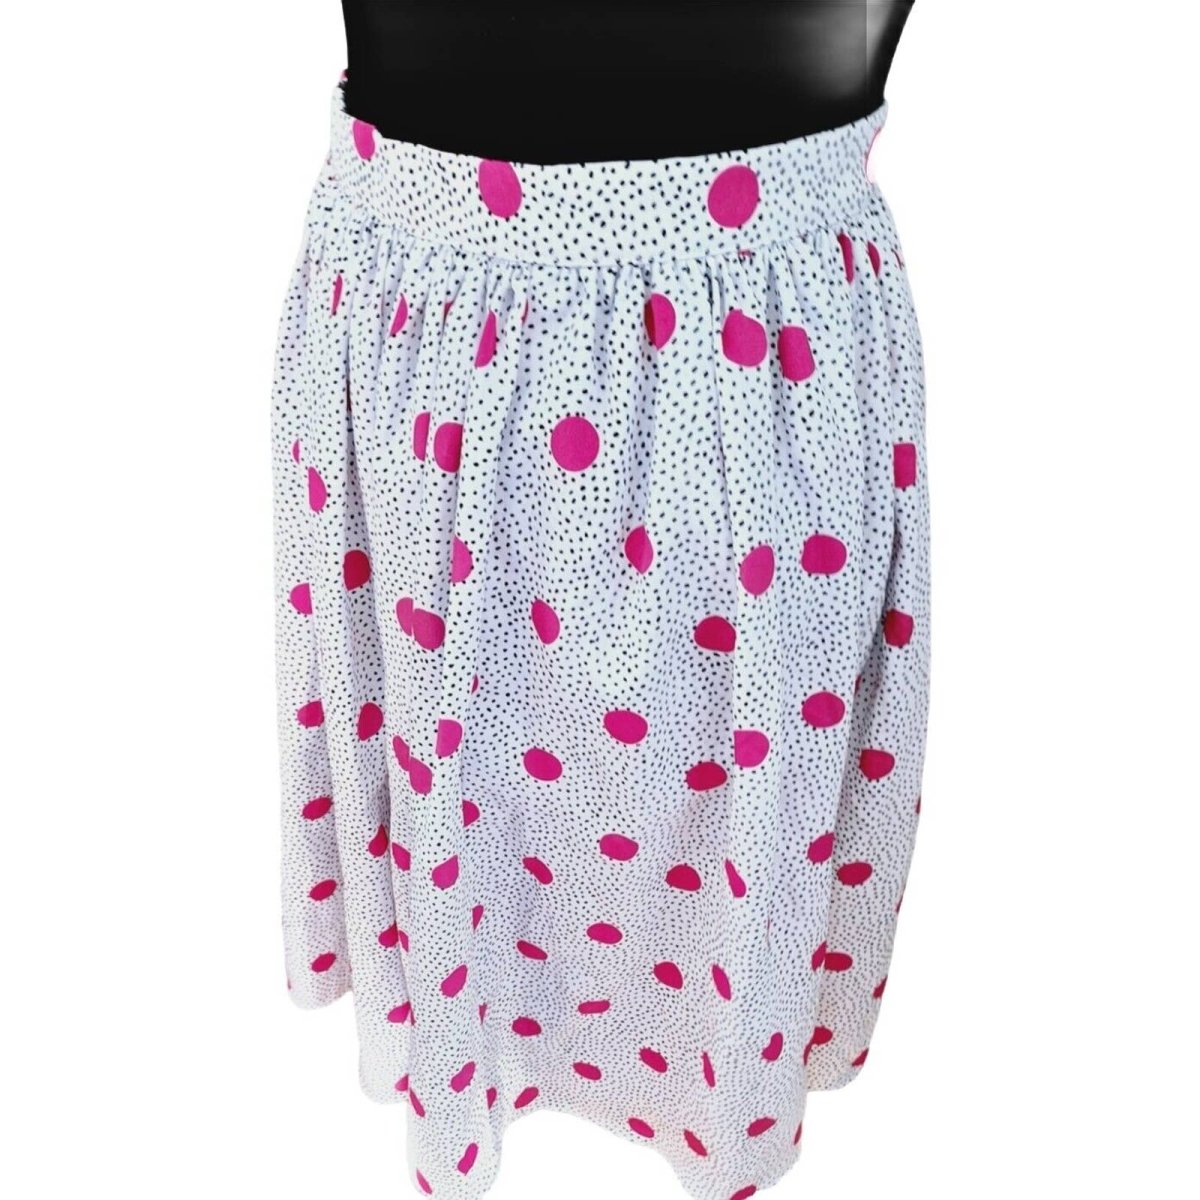 Vintage 80s Pink Polka Dot Skirt Size XS Waist 25" - themallvintage The Mall Vintage